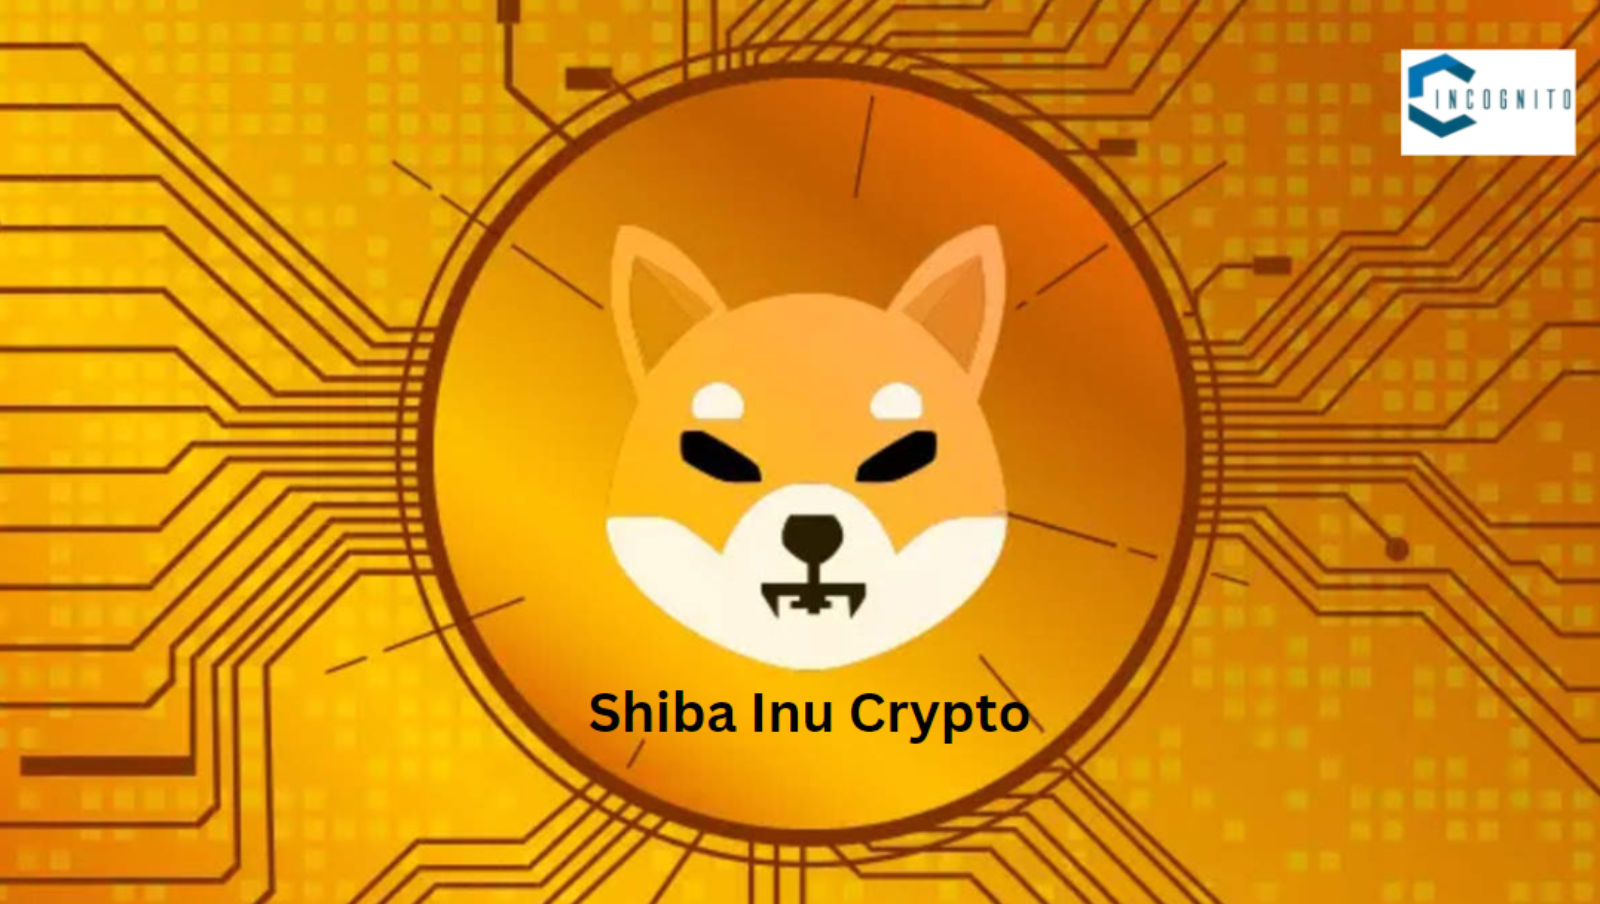 Shiba Inu Crypto